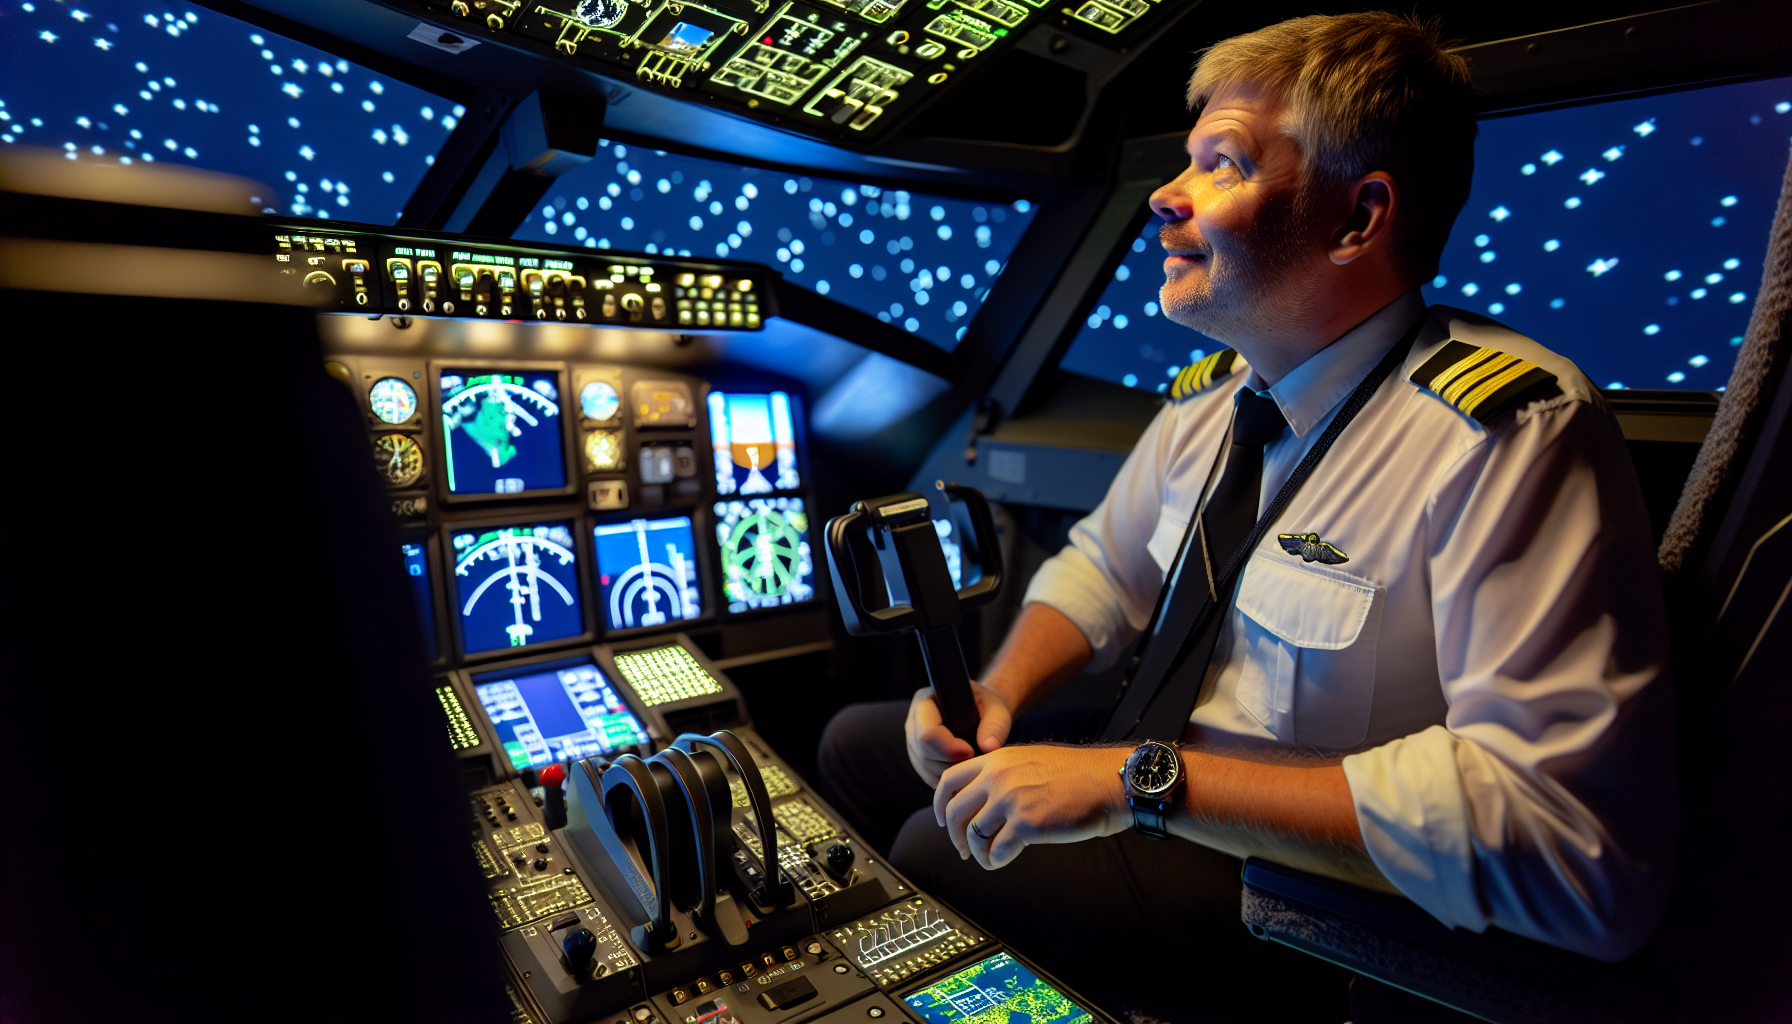 Pilot using a flight simulator for instrument rating training